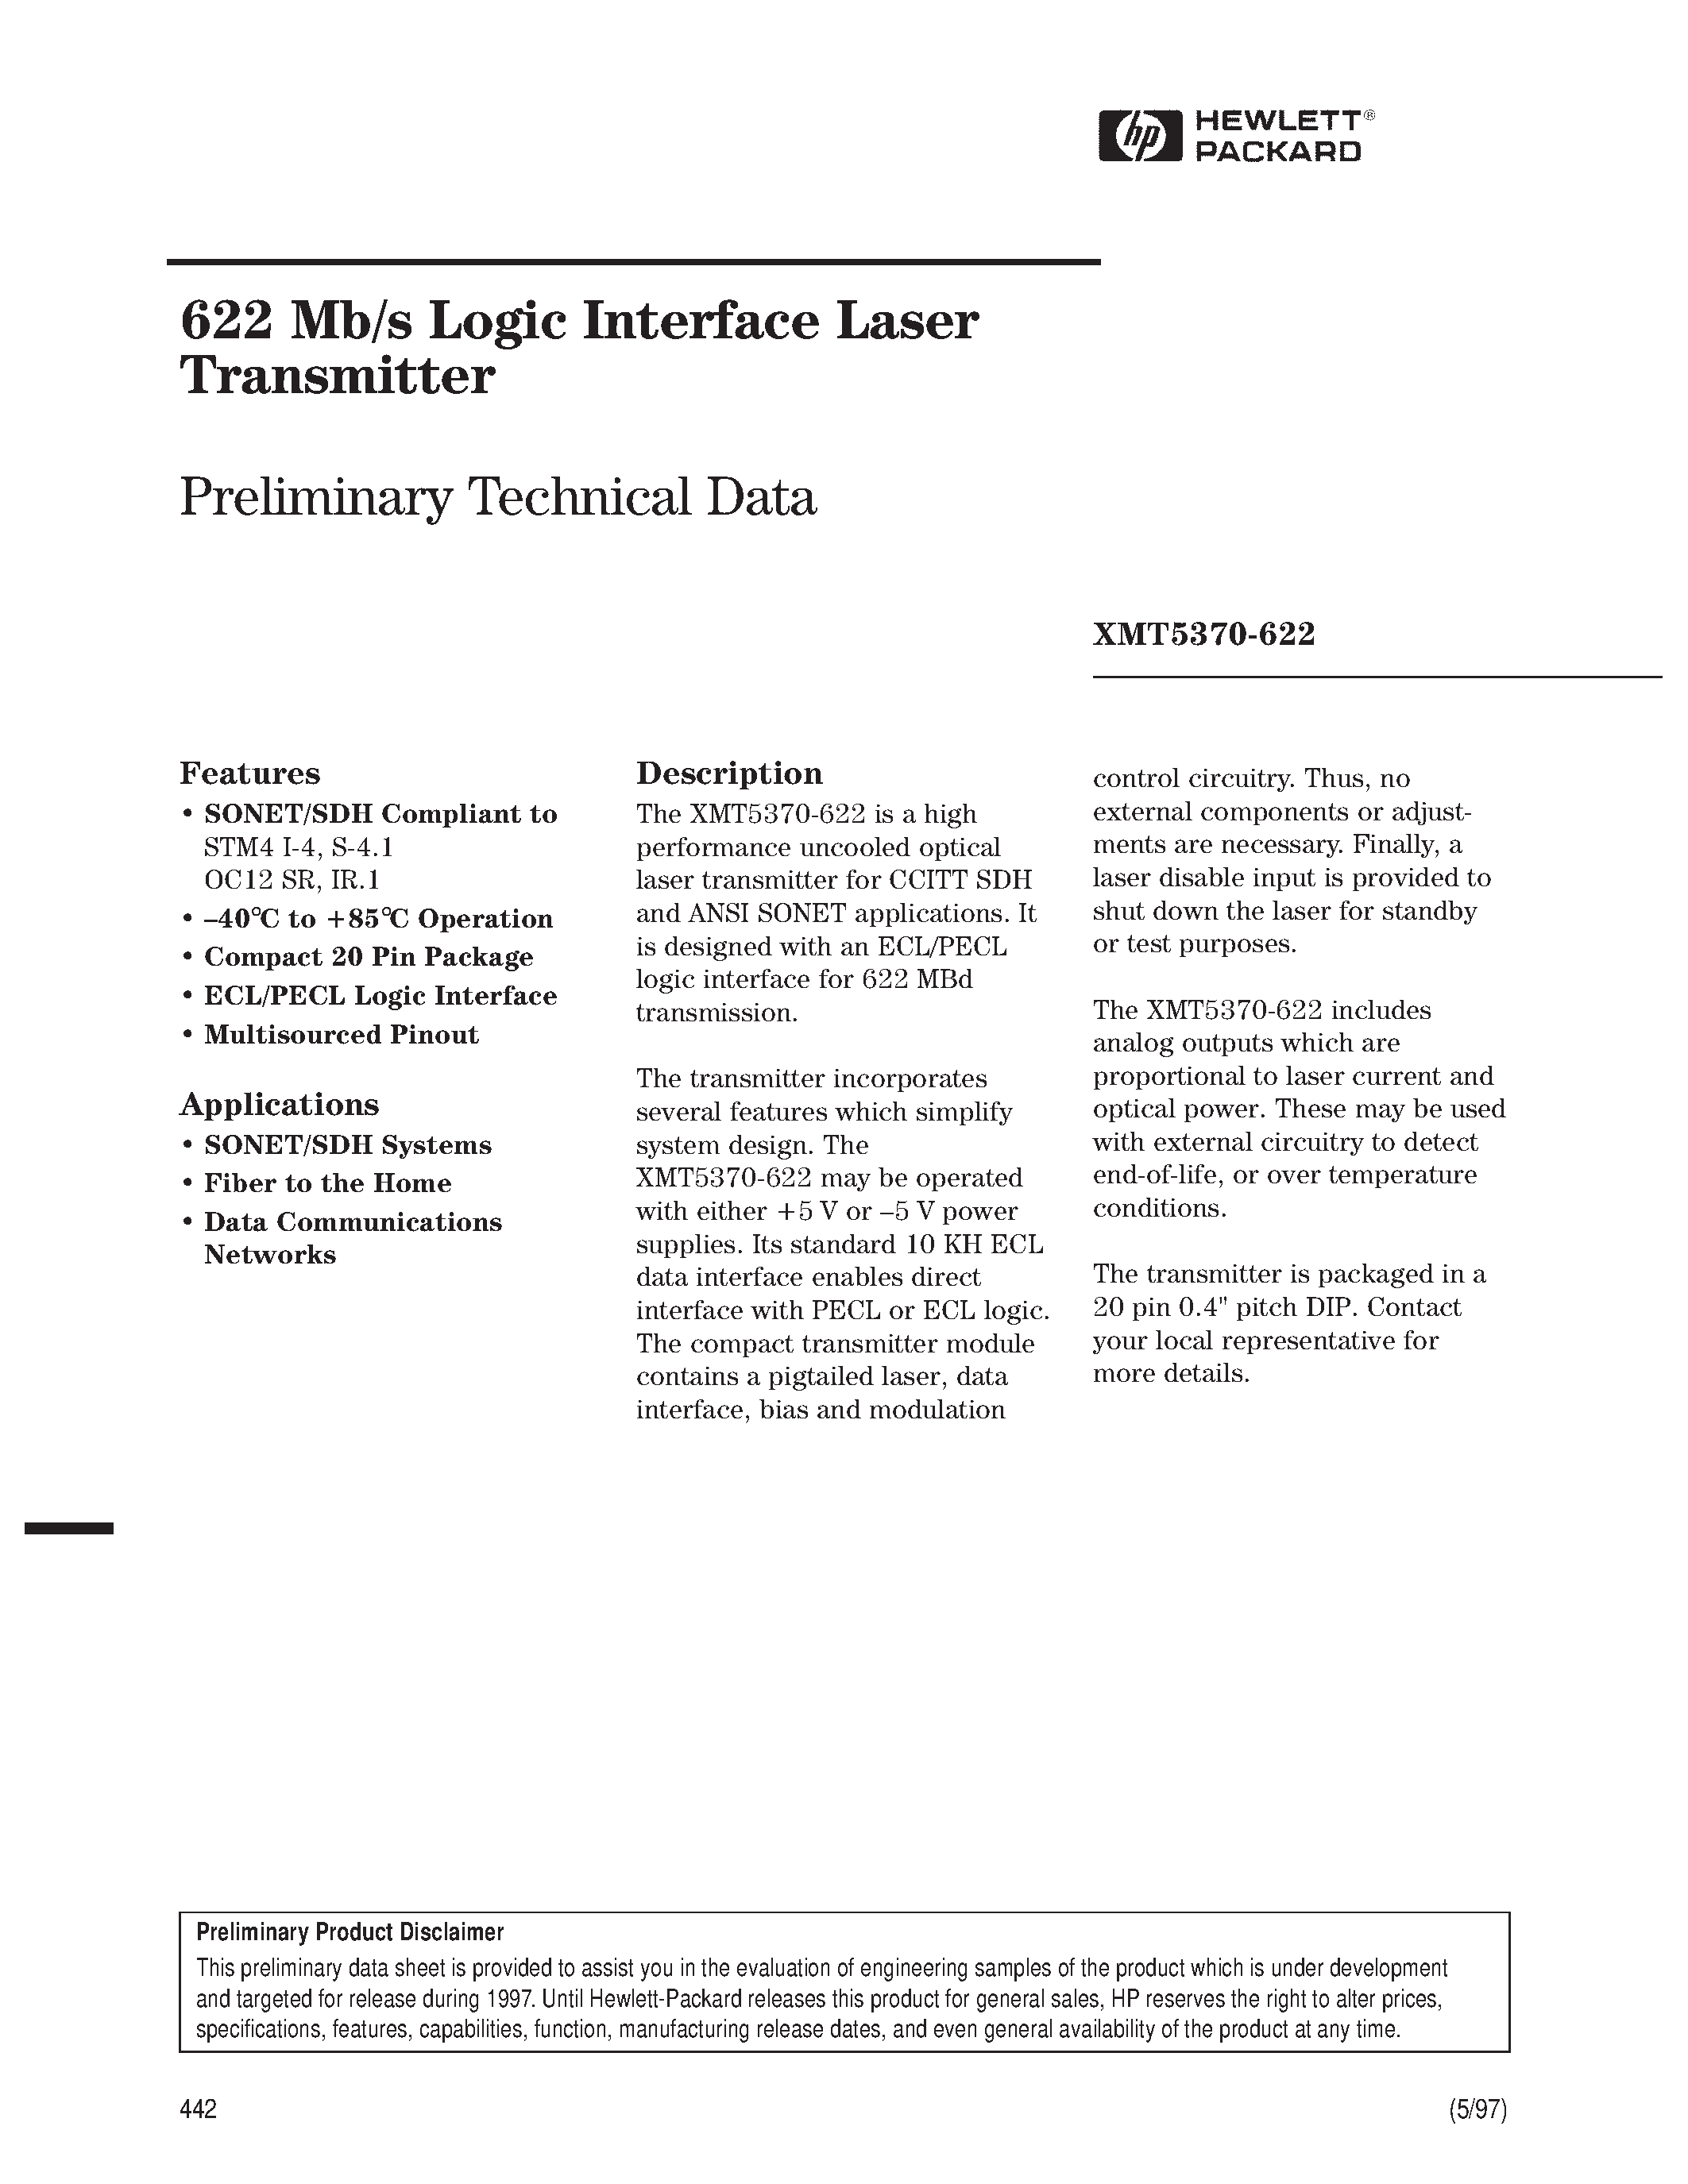 Datasheet XMT5370A-622-ST - 622 Mb/s Logic Interface Laser Transmitter page 1